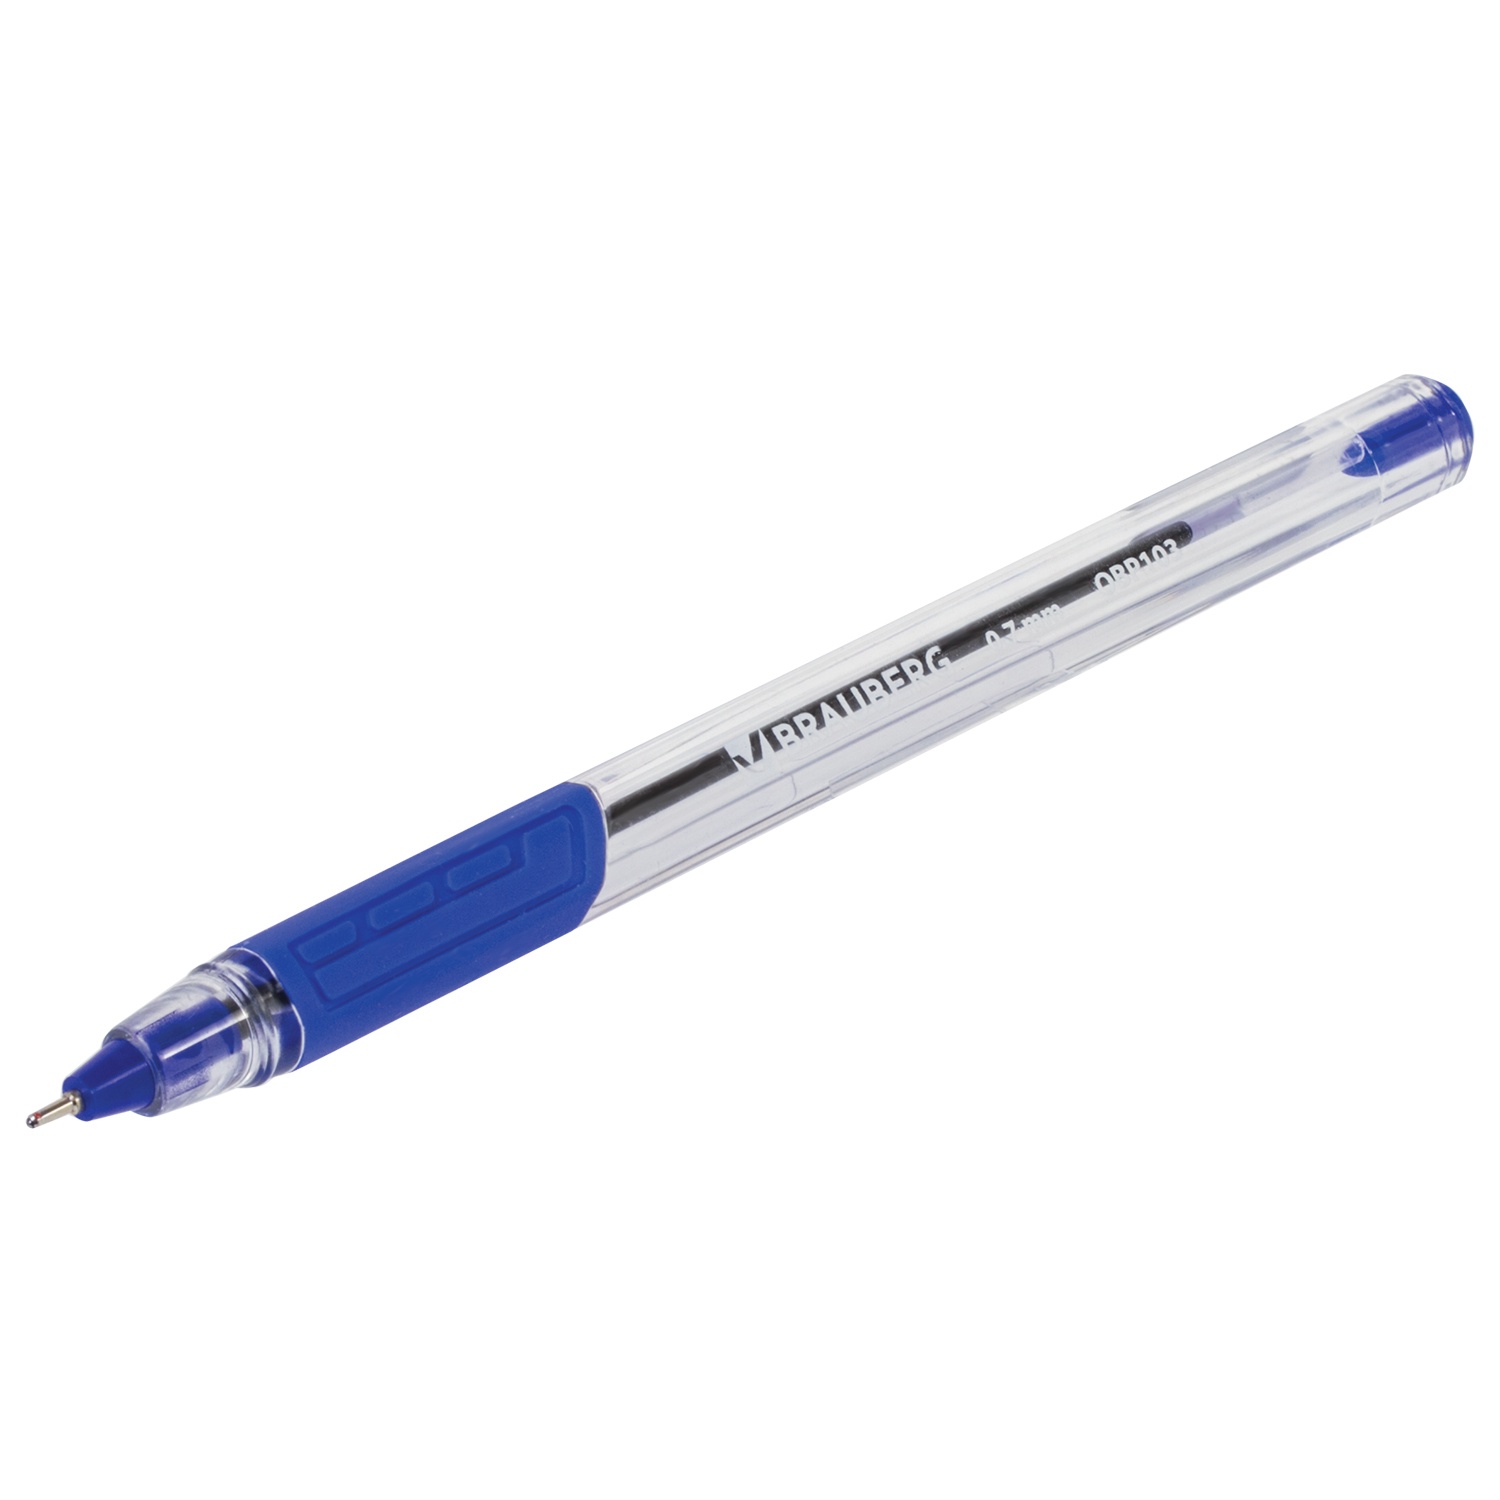 Brauberg 0.7. Ручка шариковая синяя БРАУБЕРГ. Ручка БРАУБЕРГ 0.7 масляная. Ручка БРАУБЕРГ масляная. Obp103 ручка BRAUBERG.